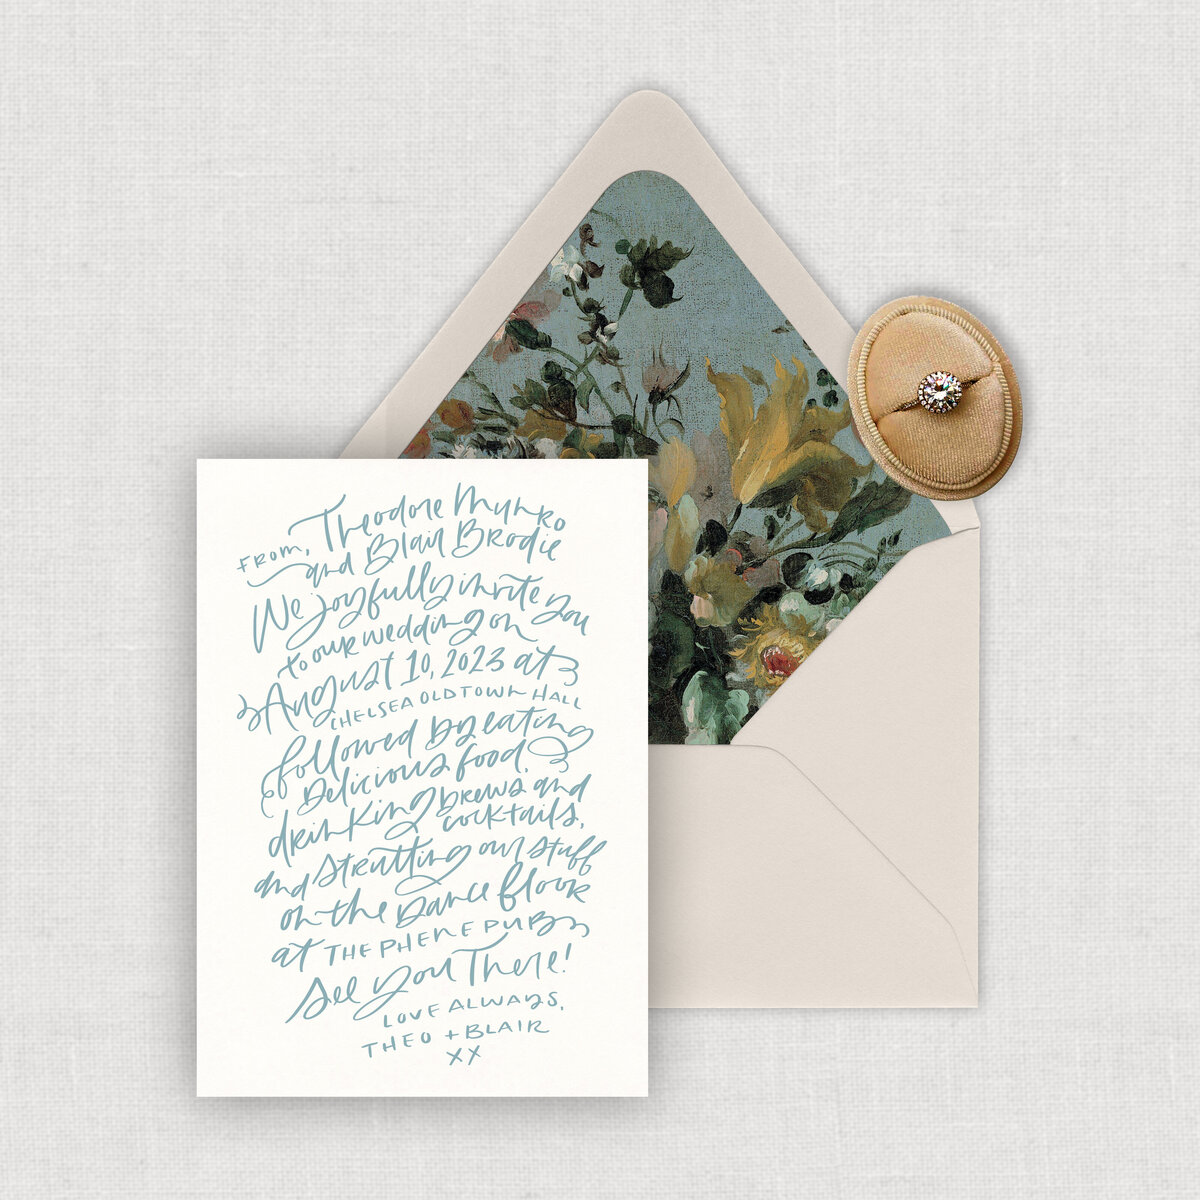 Handwritten calligraphy wedding invitation with printed envelope liner.